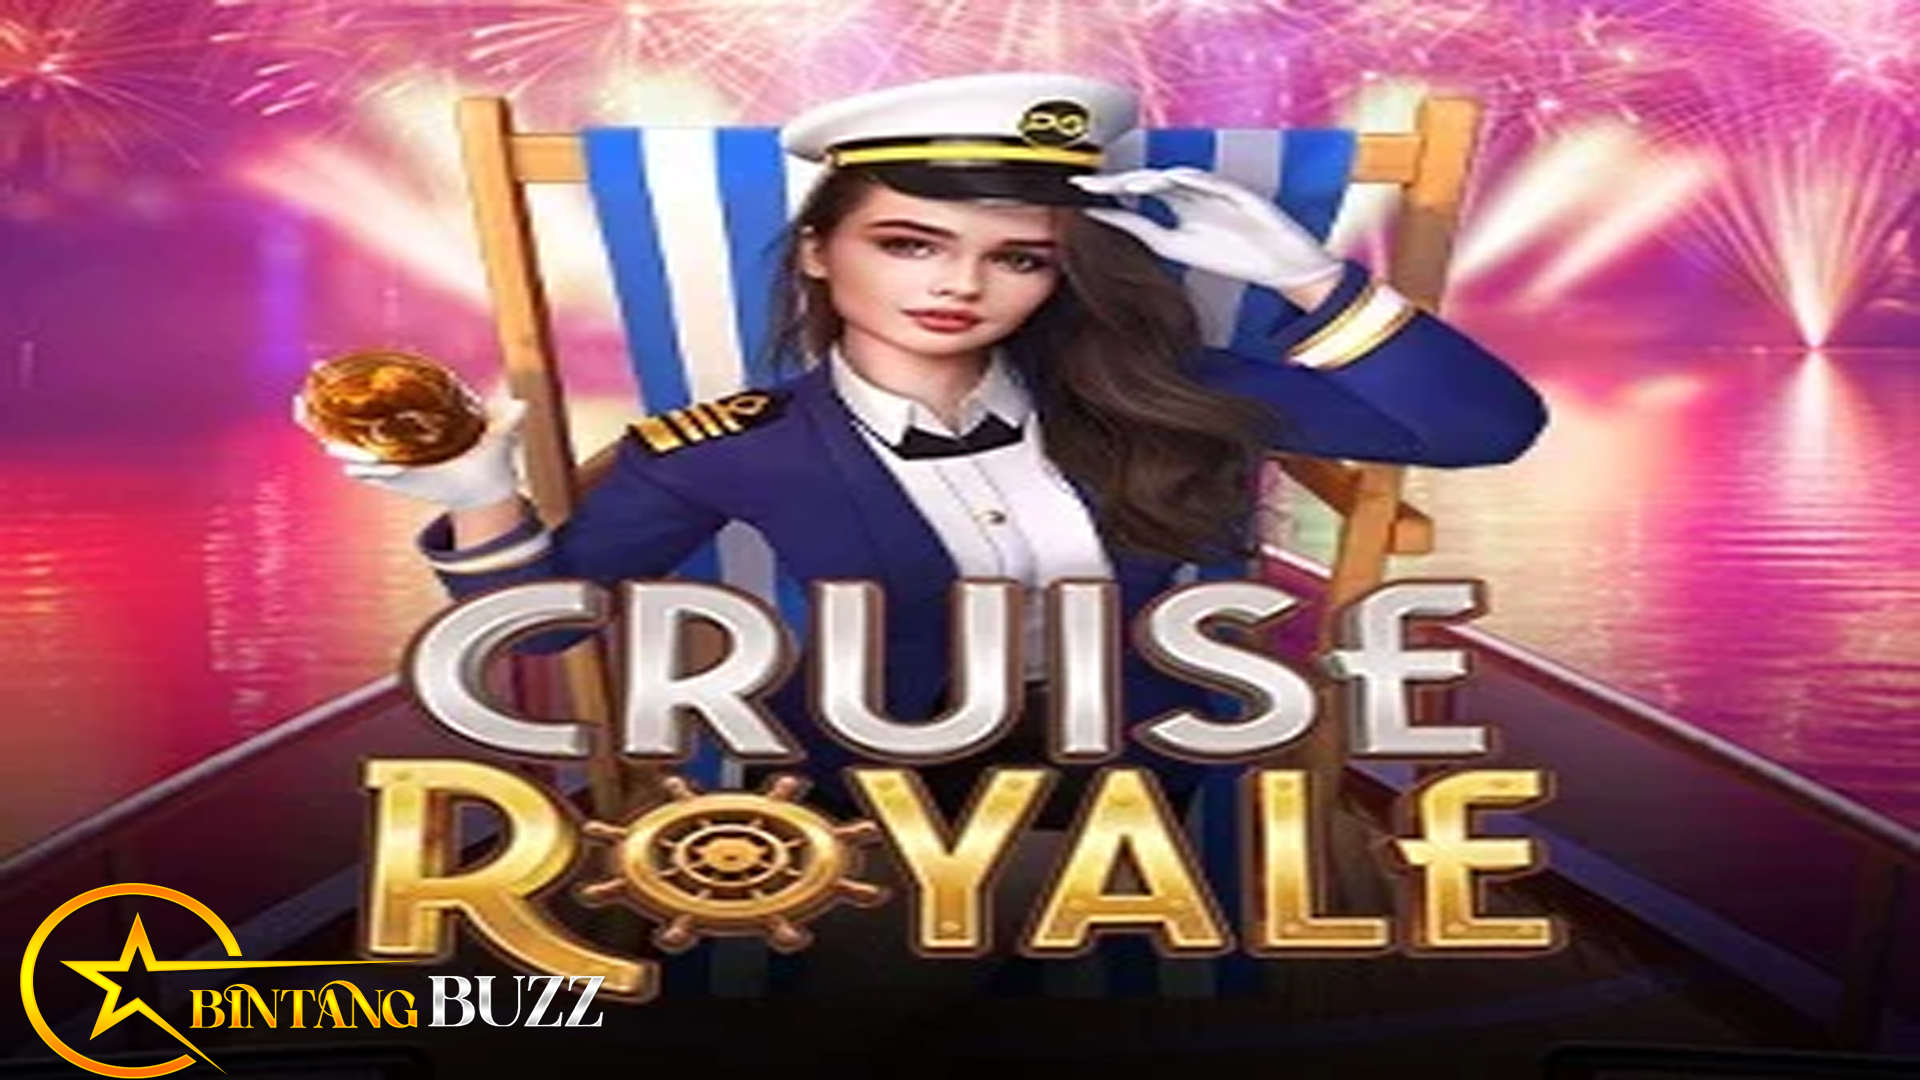 Cruise Royale Pengalaman Perjudian Slot Gacor yang Luar Biasa